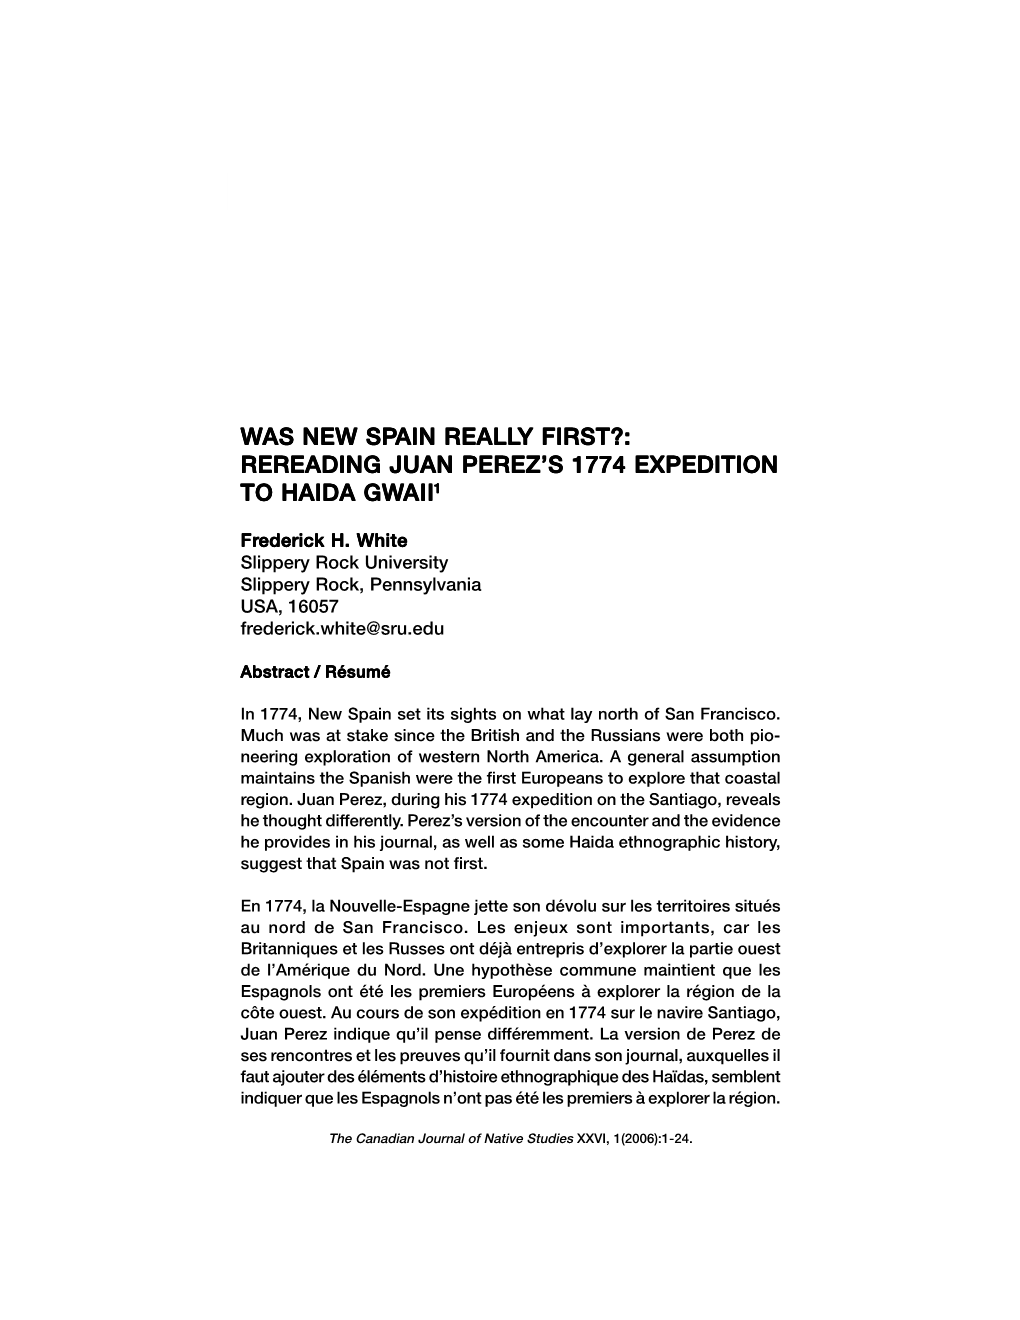 Rereading Juan Perez's 1774 Expedition to Haida Gwaii